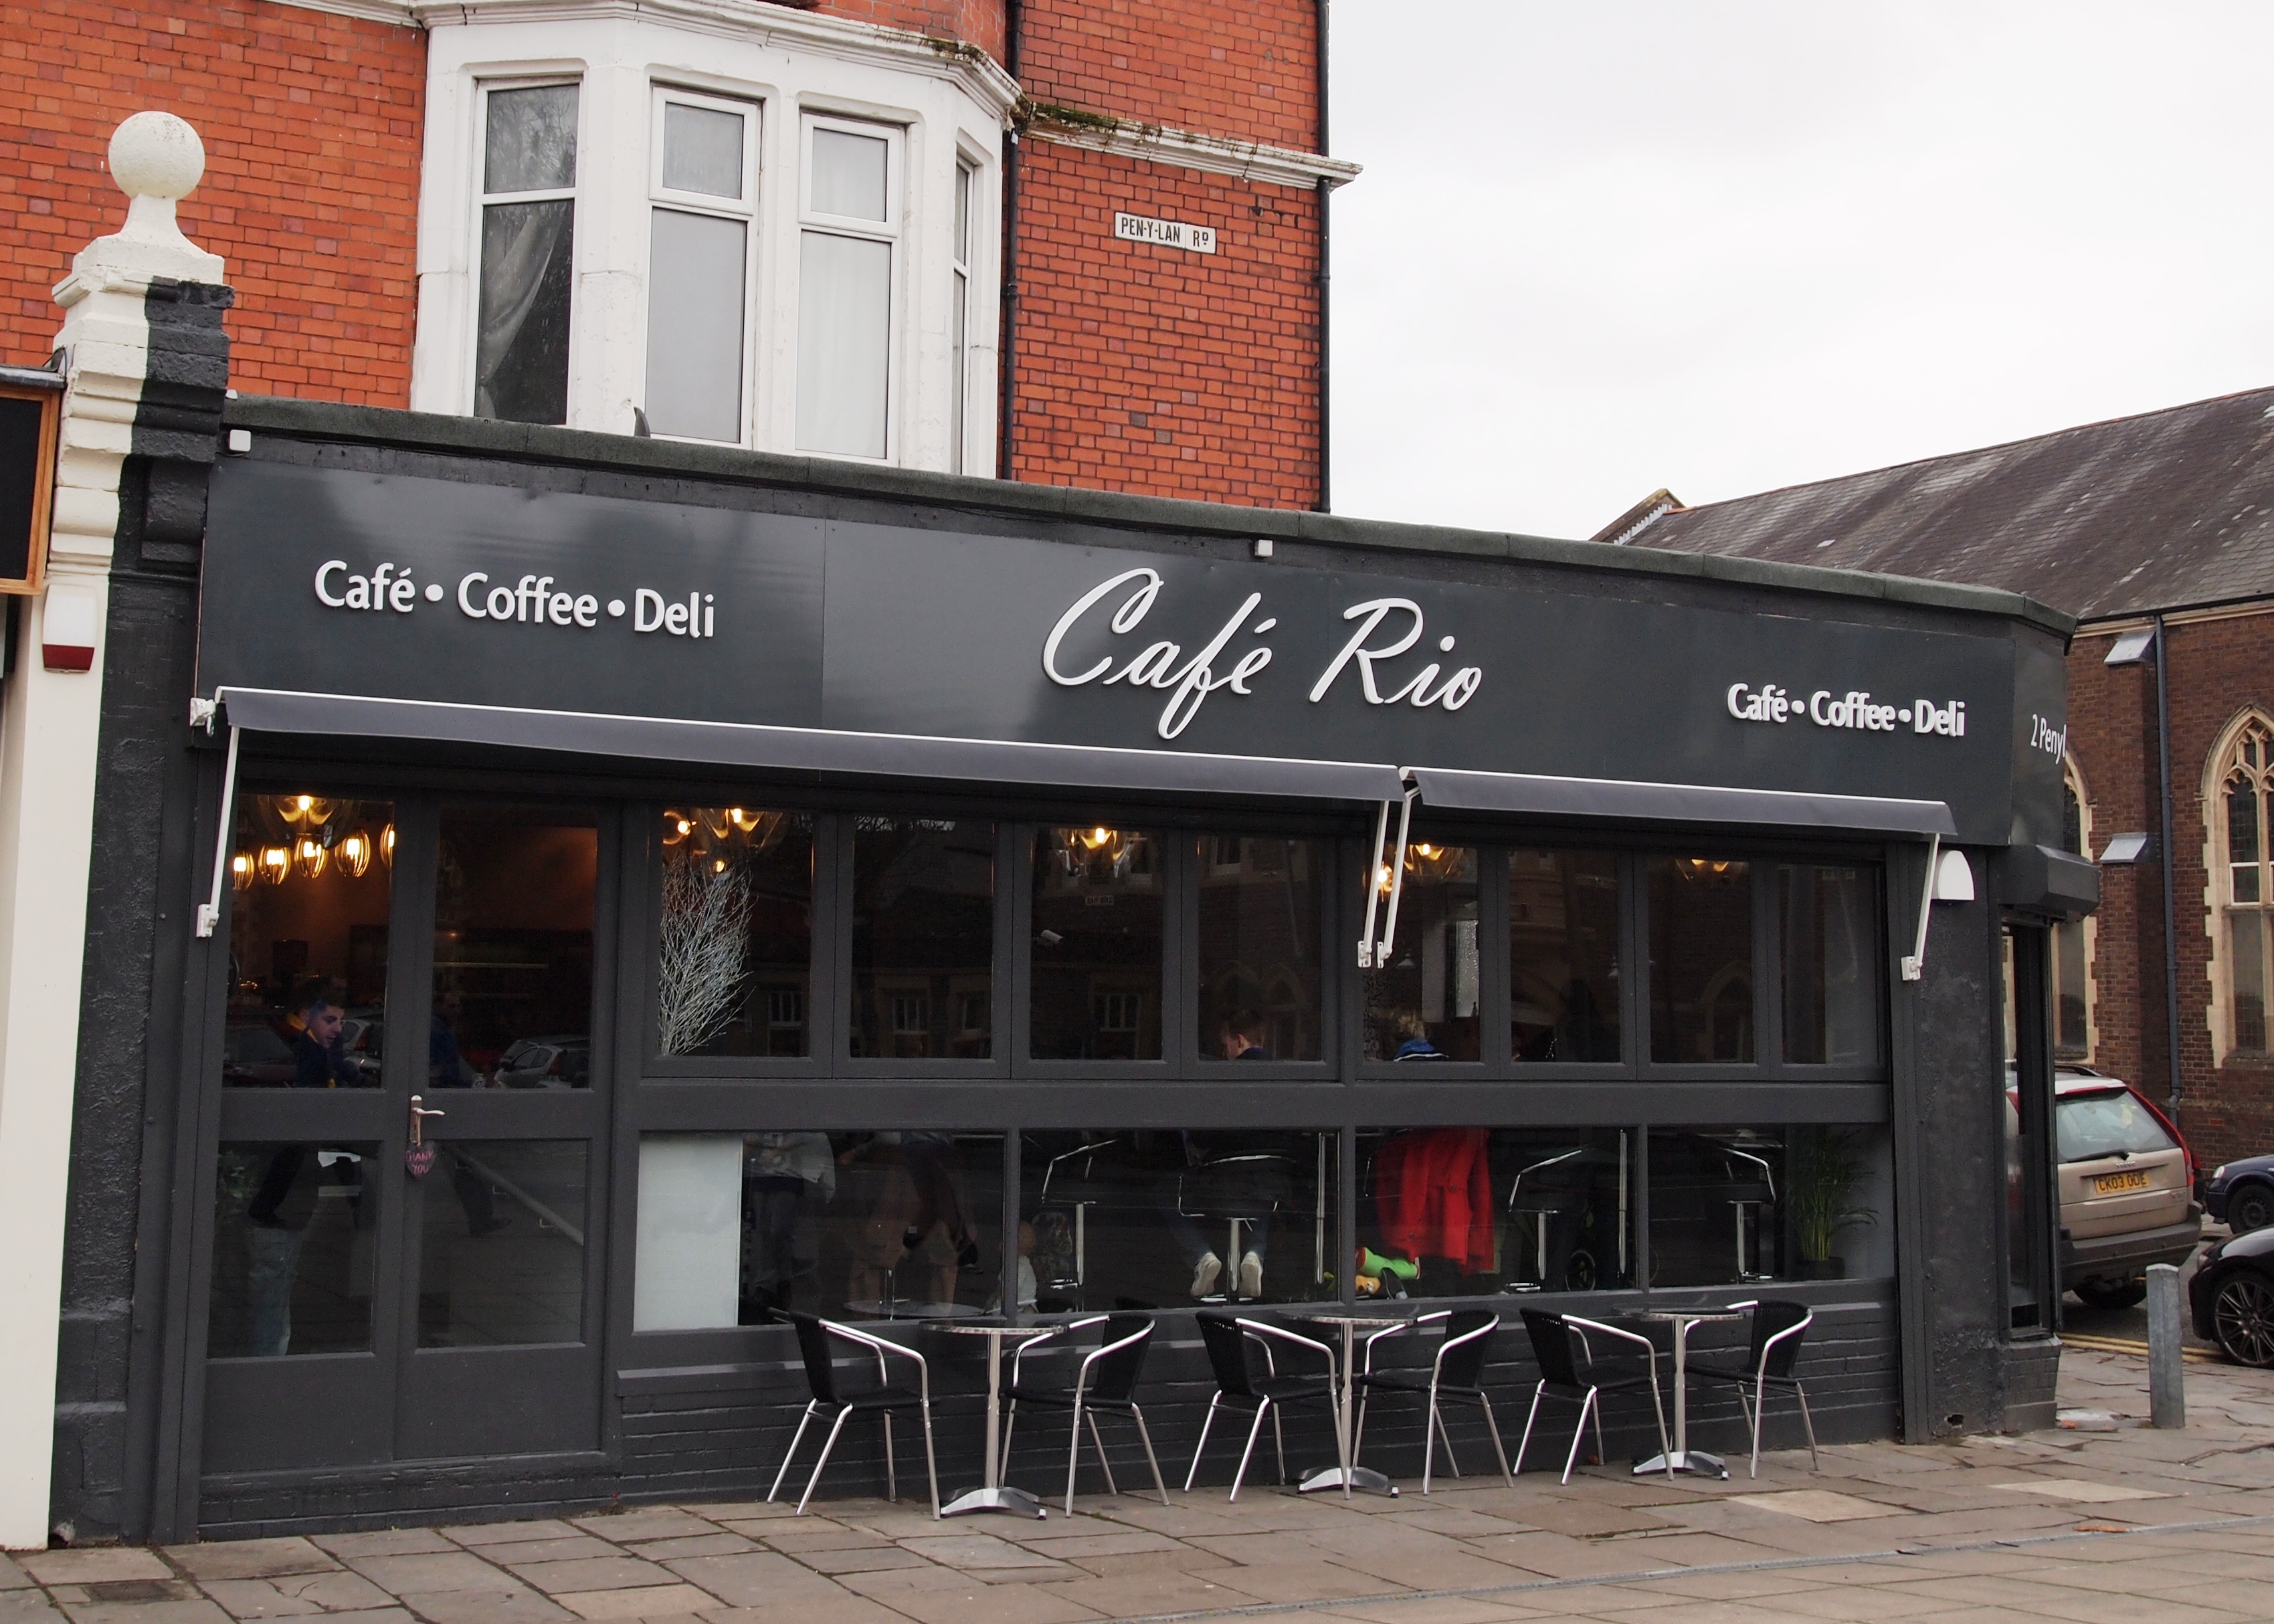 Cafe Rio opens on Penylan Road - Roath Cardiff